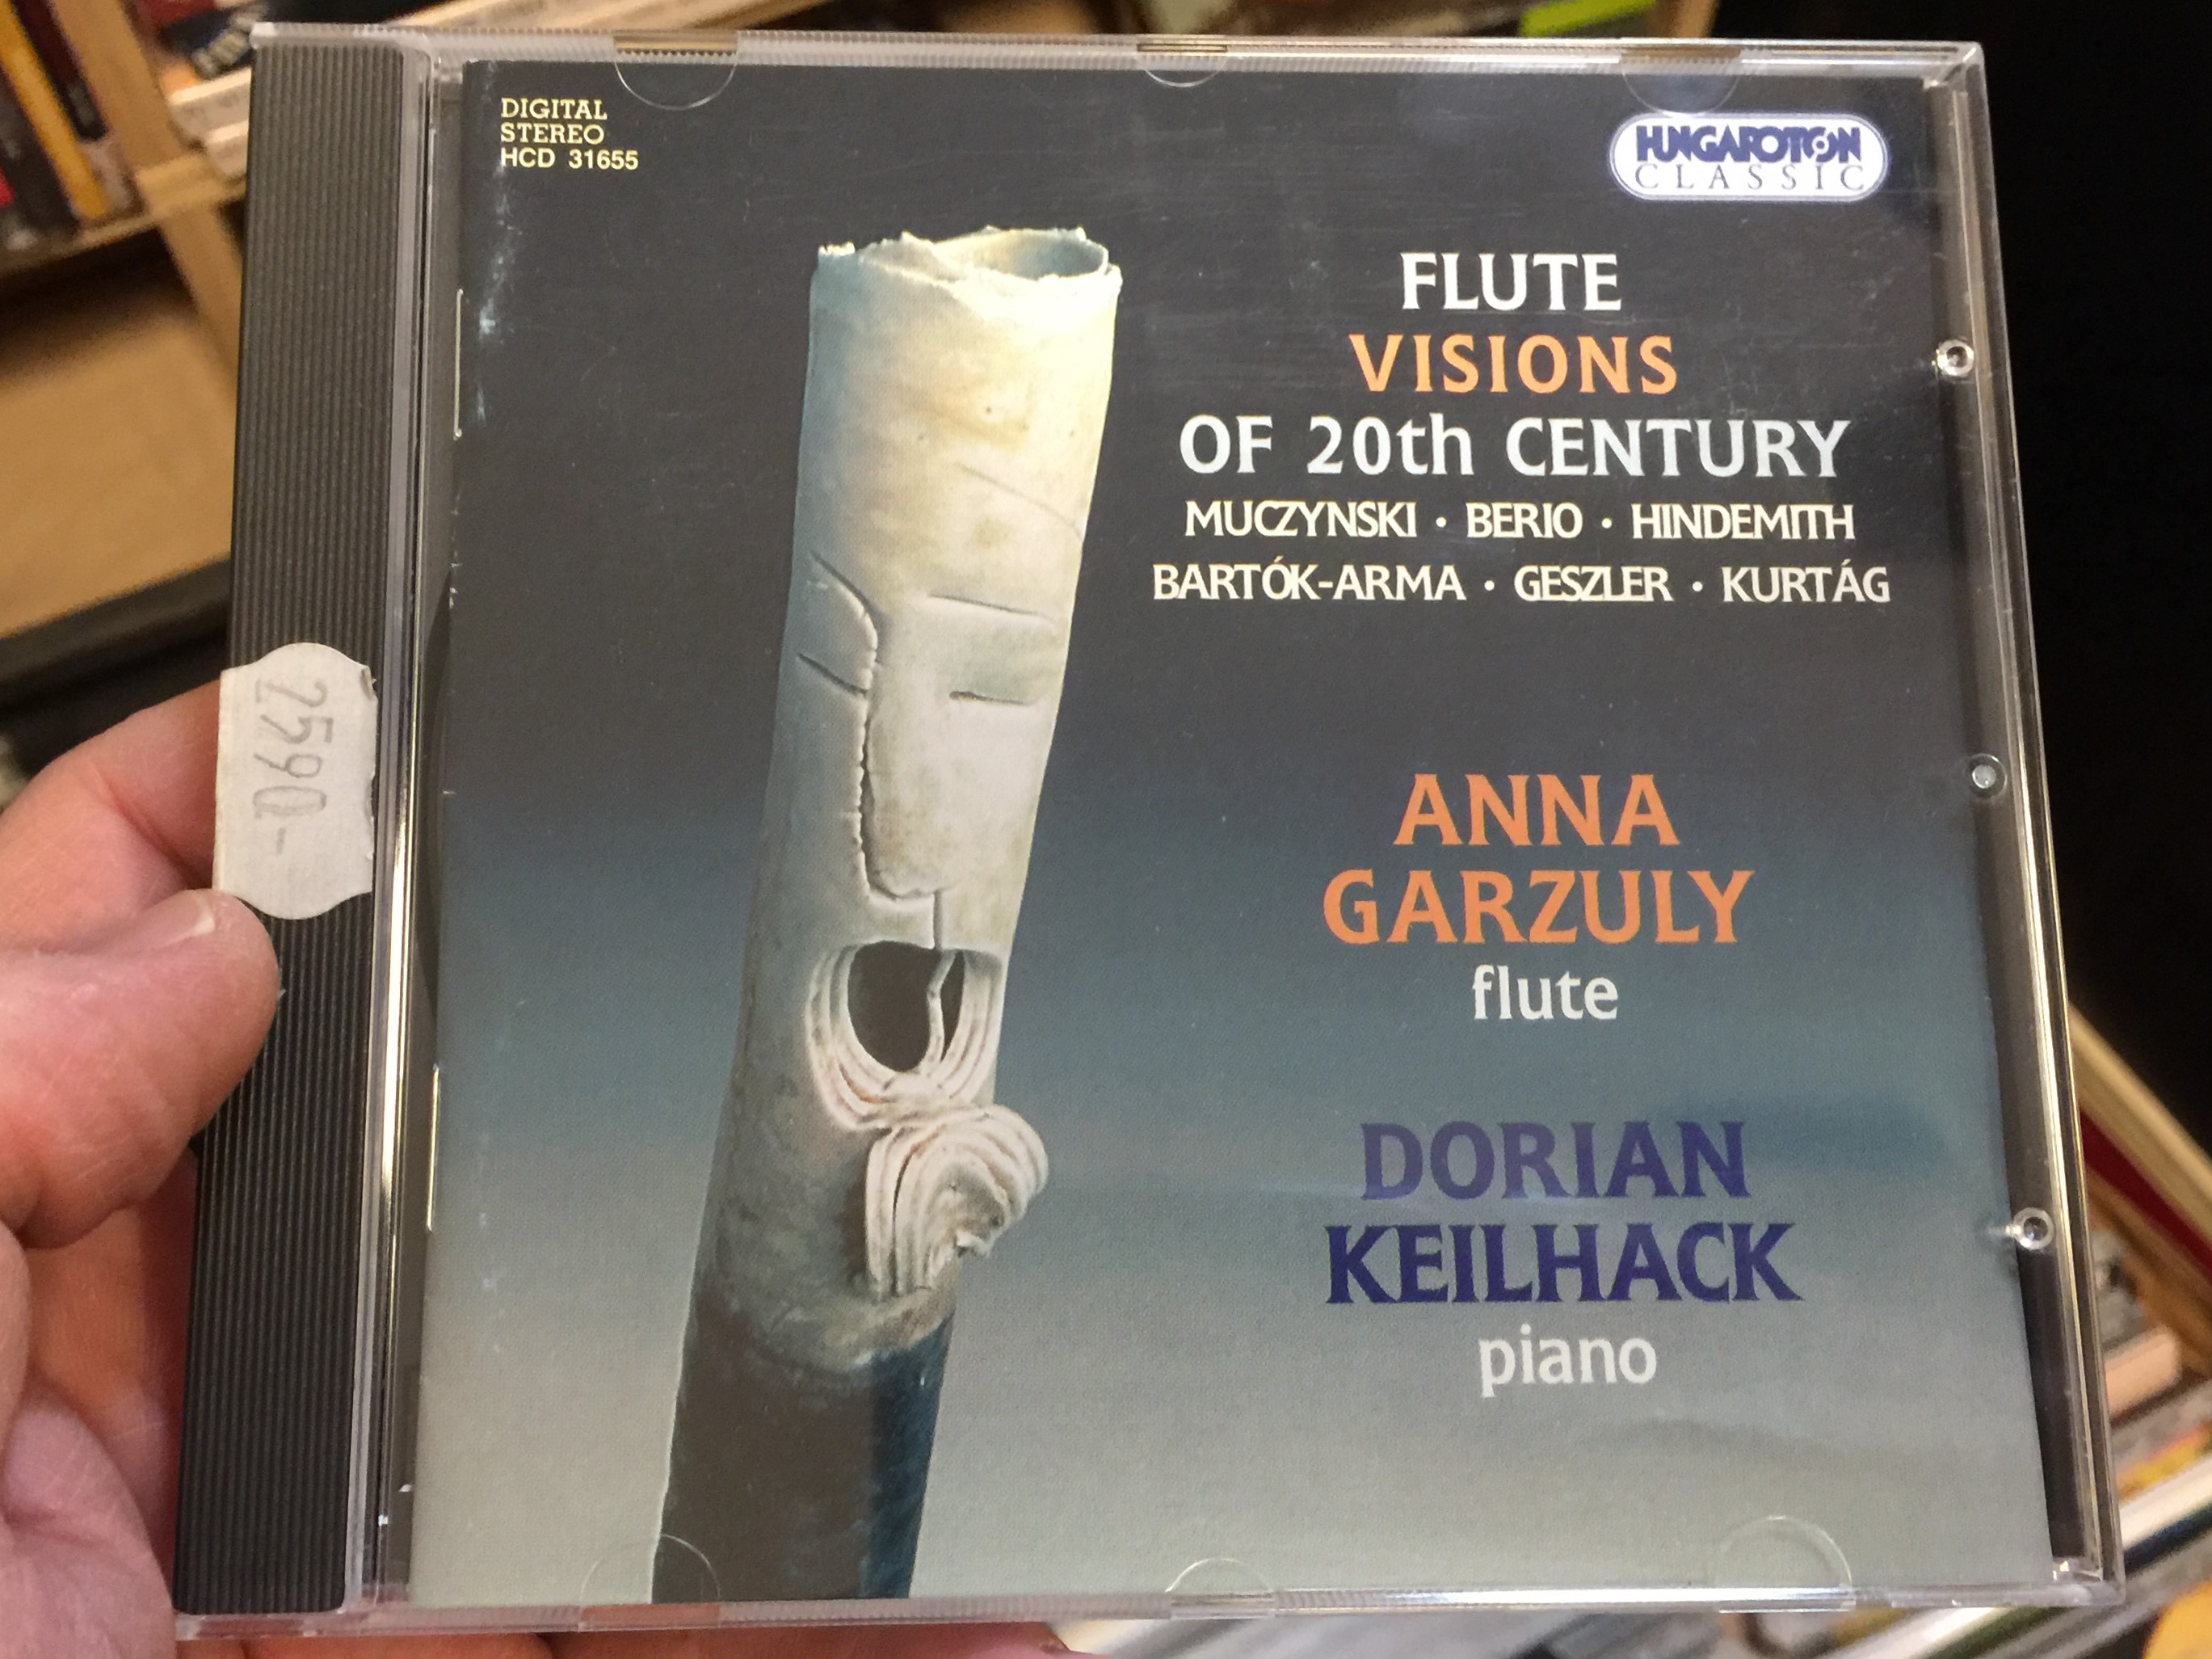 flute-visions-of-20th-century-muczynski-berio-hindemith-bartok-arma-geszler-kurtag-anna-garzuly-flute-dorian-keilhack-piano-hungaroton-classic-audio-cd-1996-stereo-hcd-31655-1-.jpg